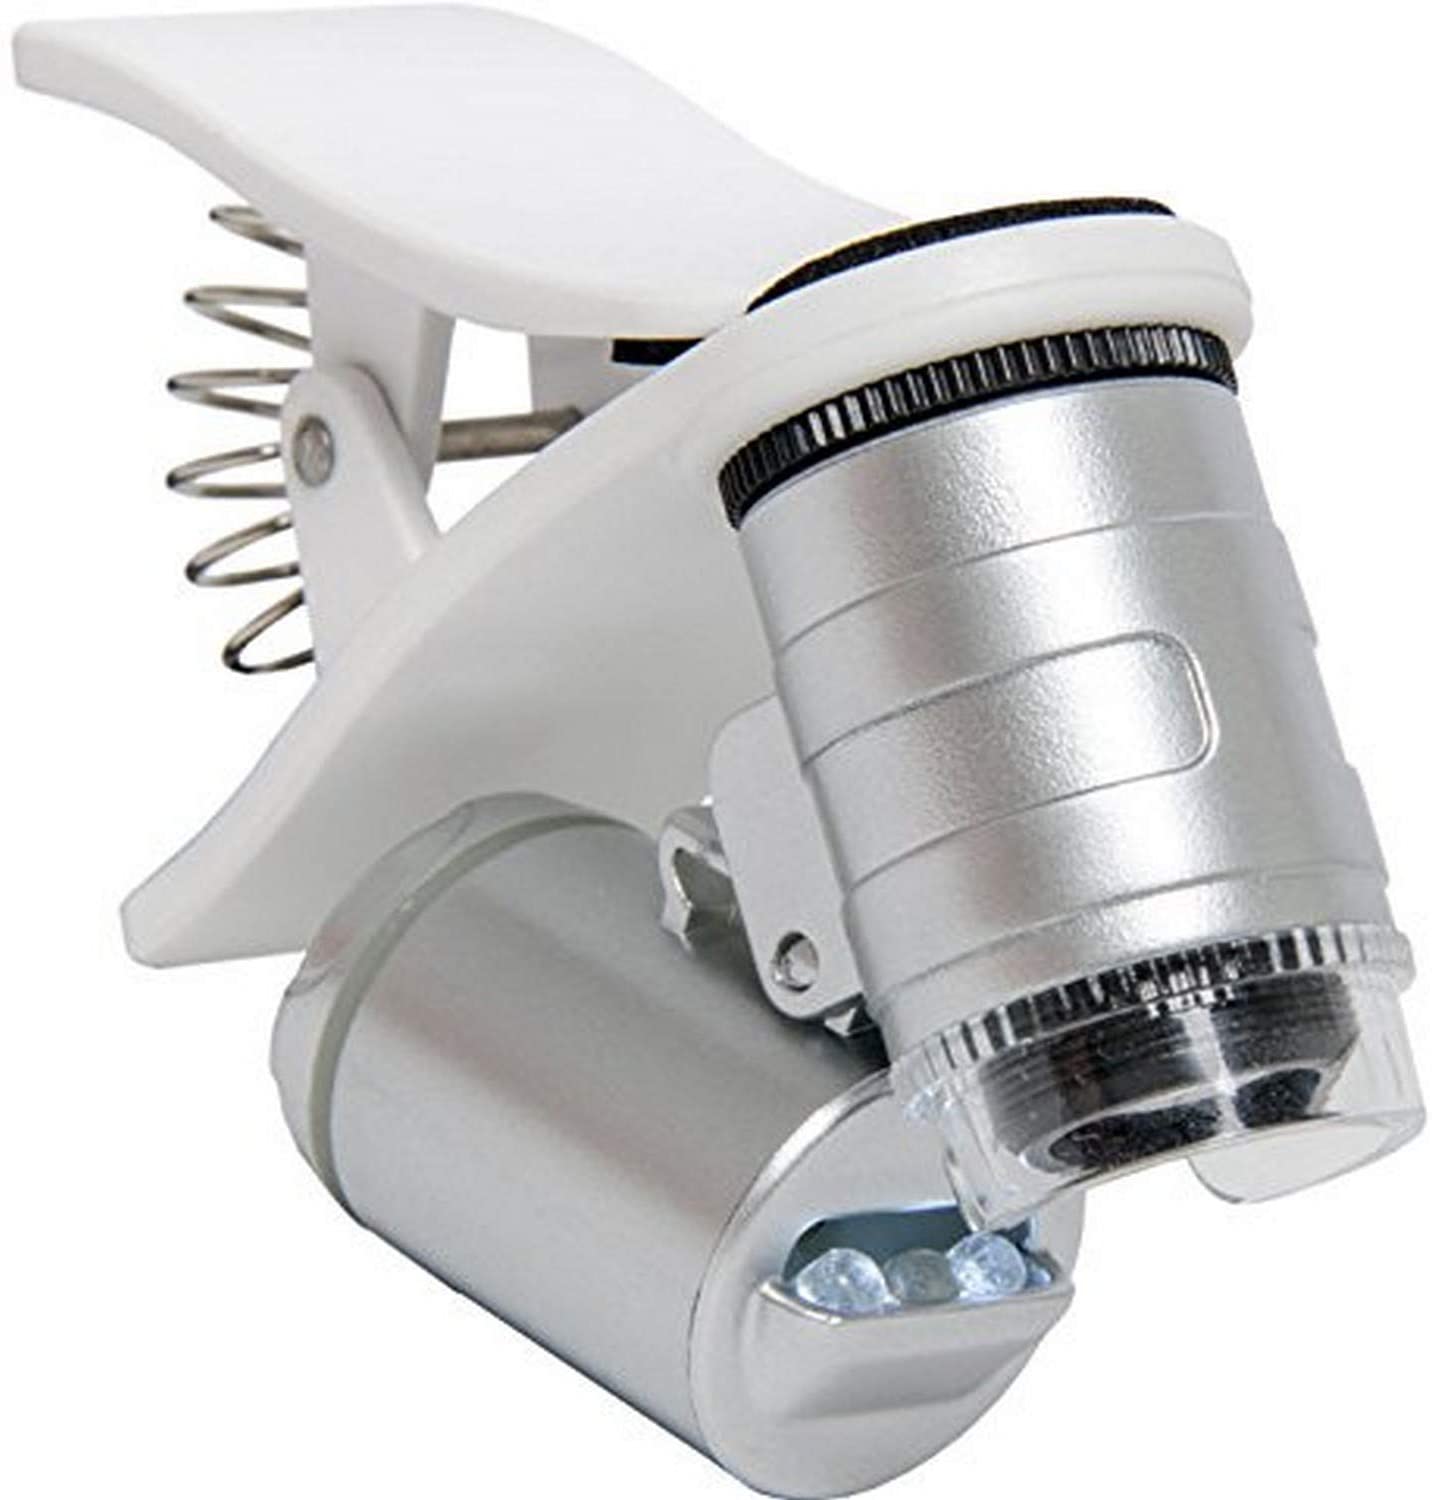 Active Eye Universal Phone Microscope 60x with Clamp